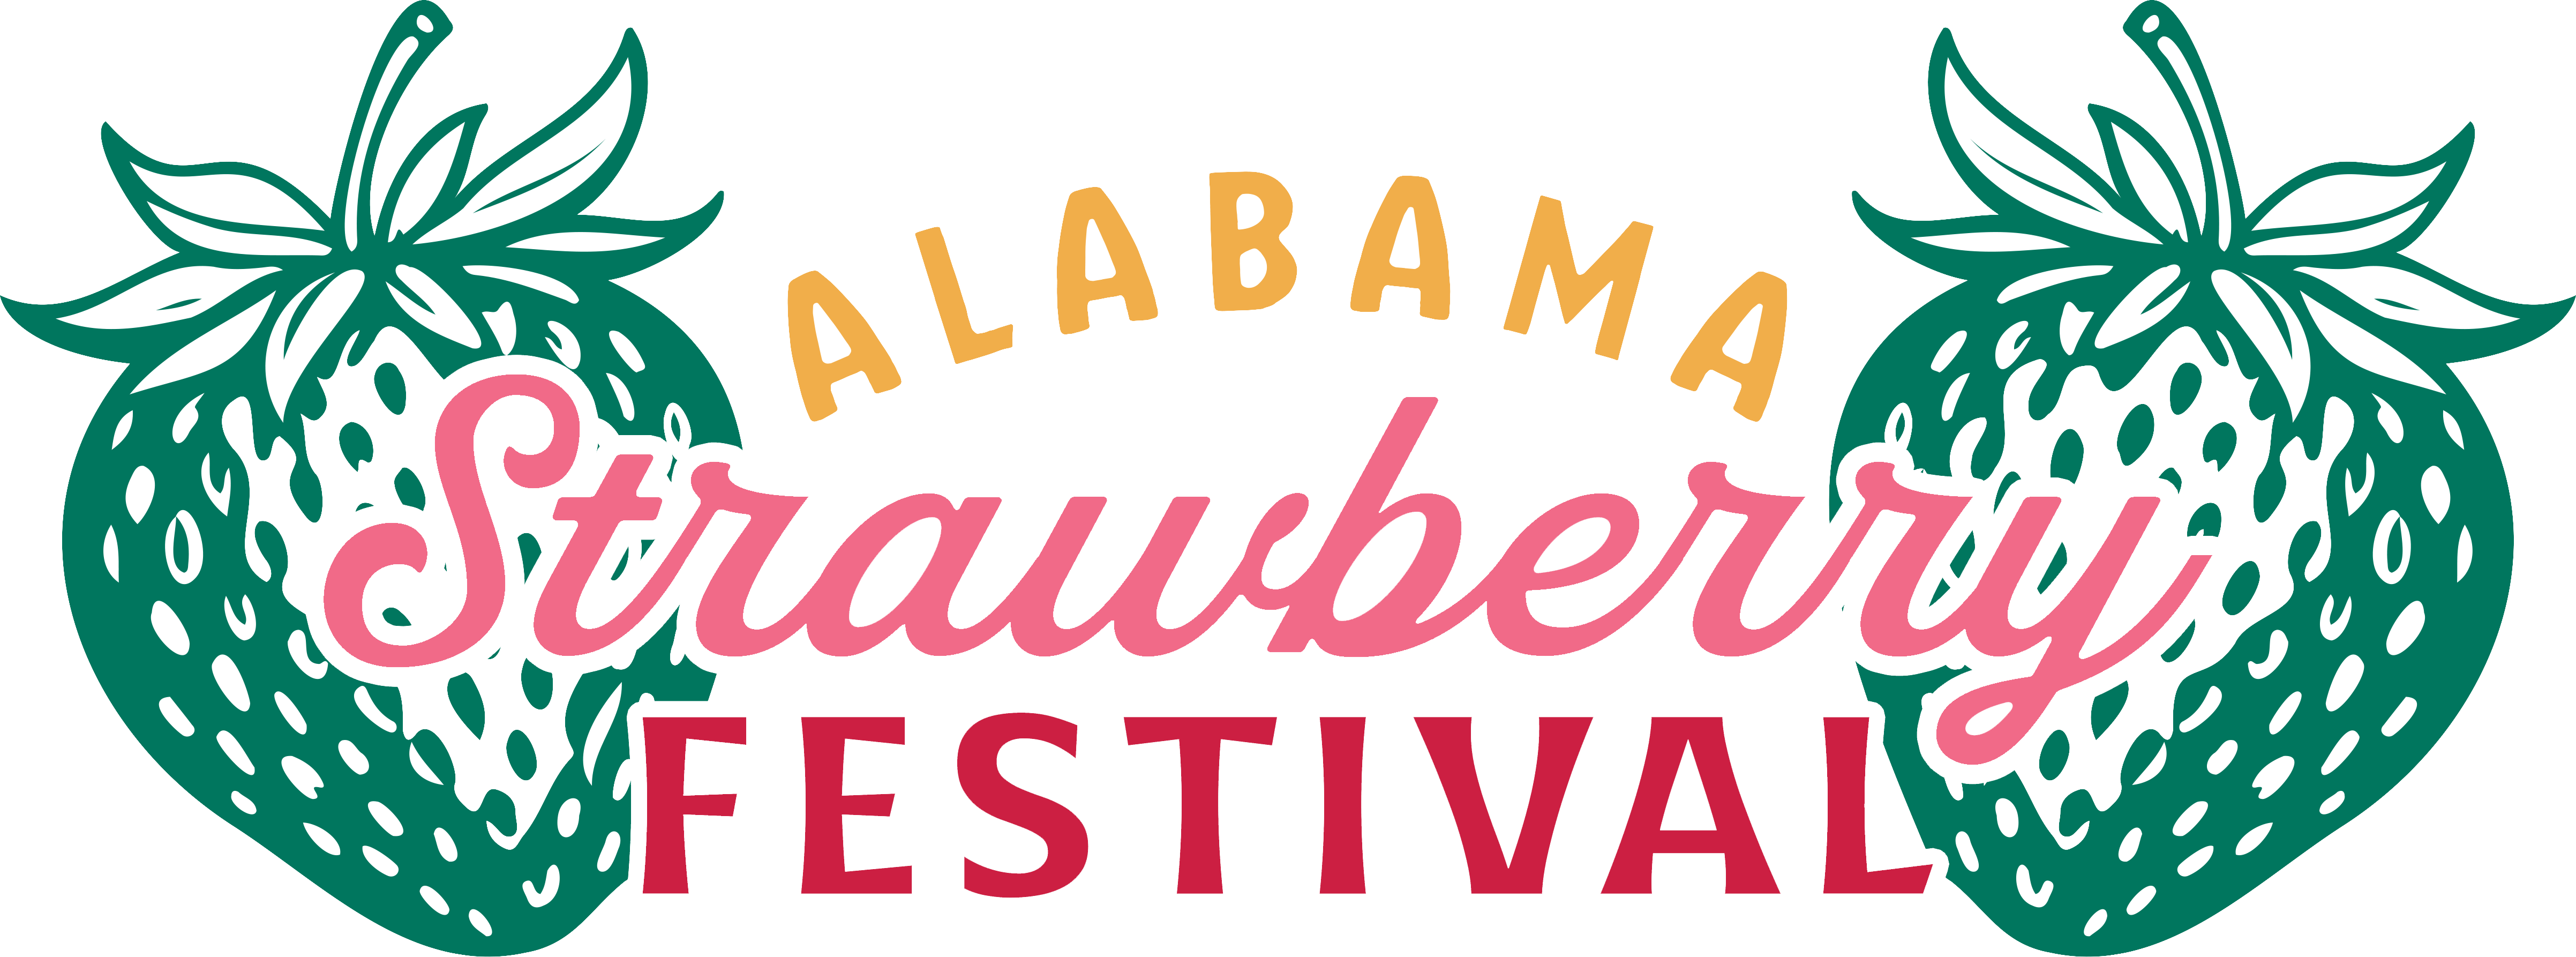 Miss Alabama Strawberry Festival Registration